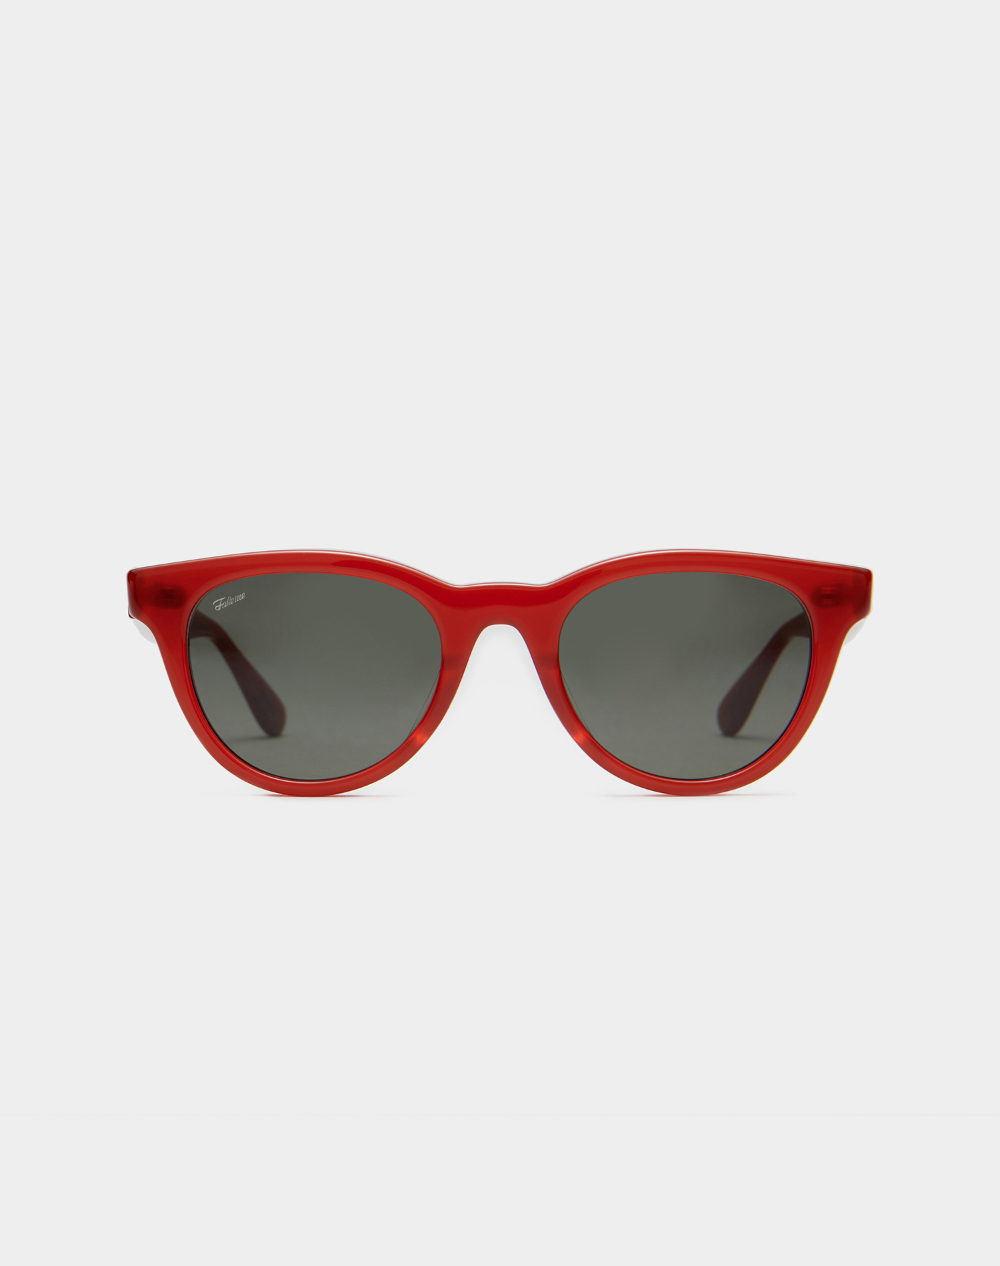 glasses khaki color image-S1L6